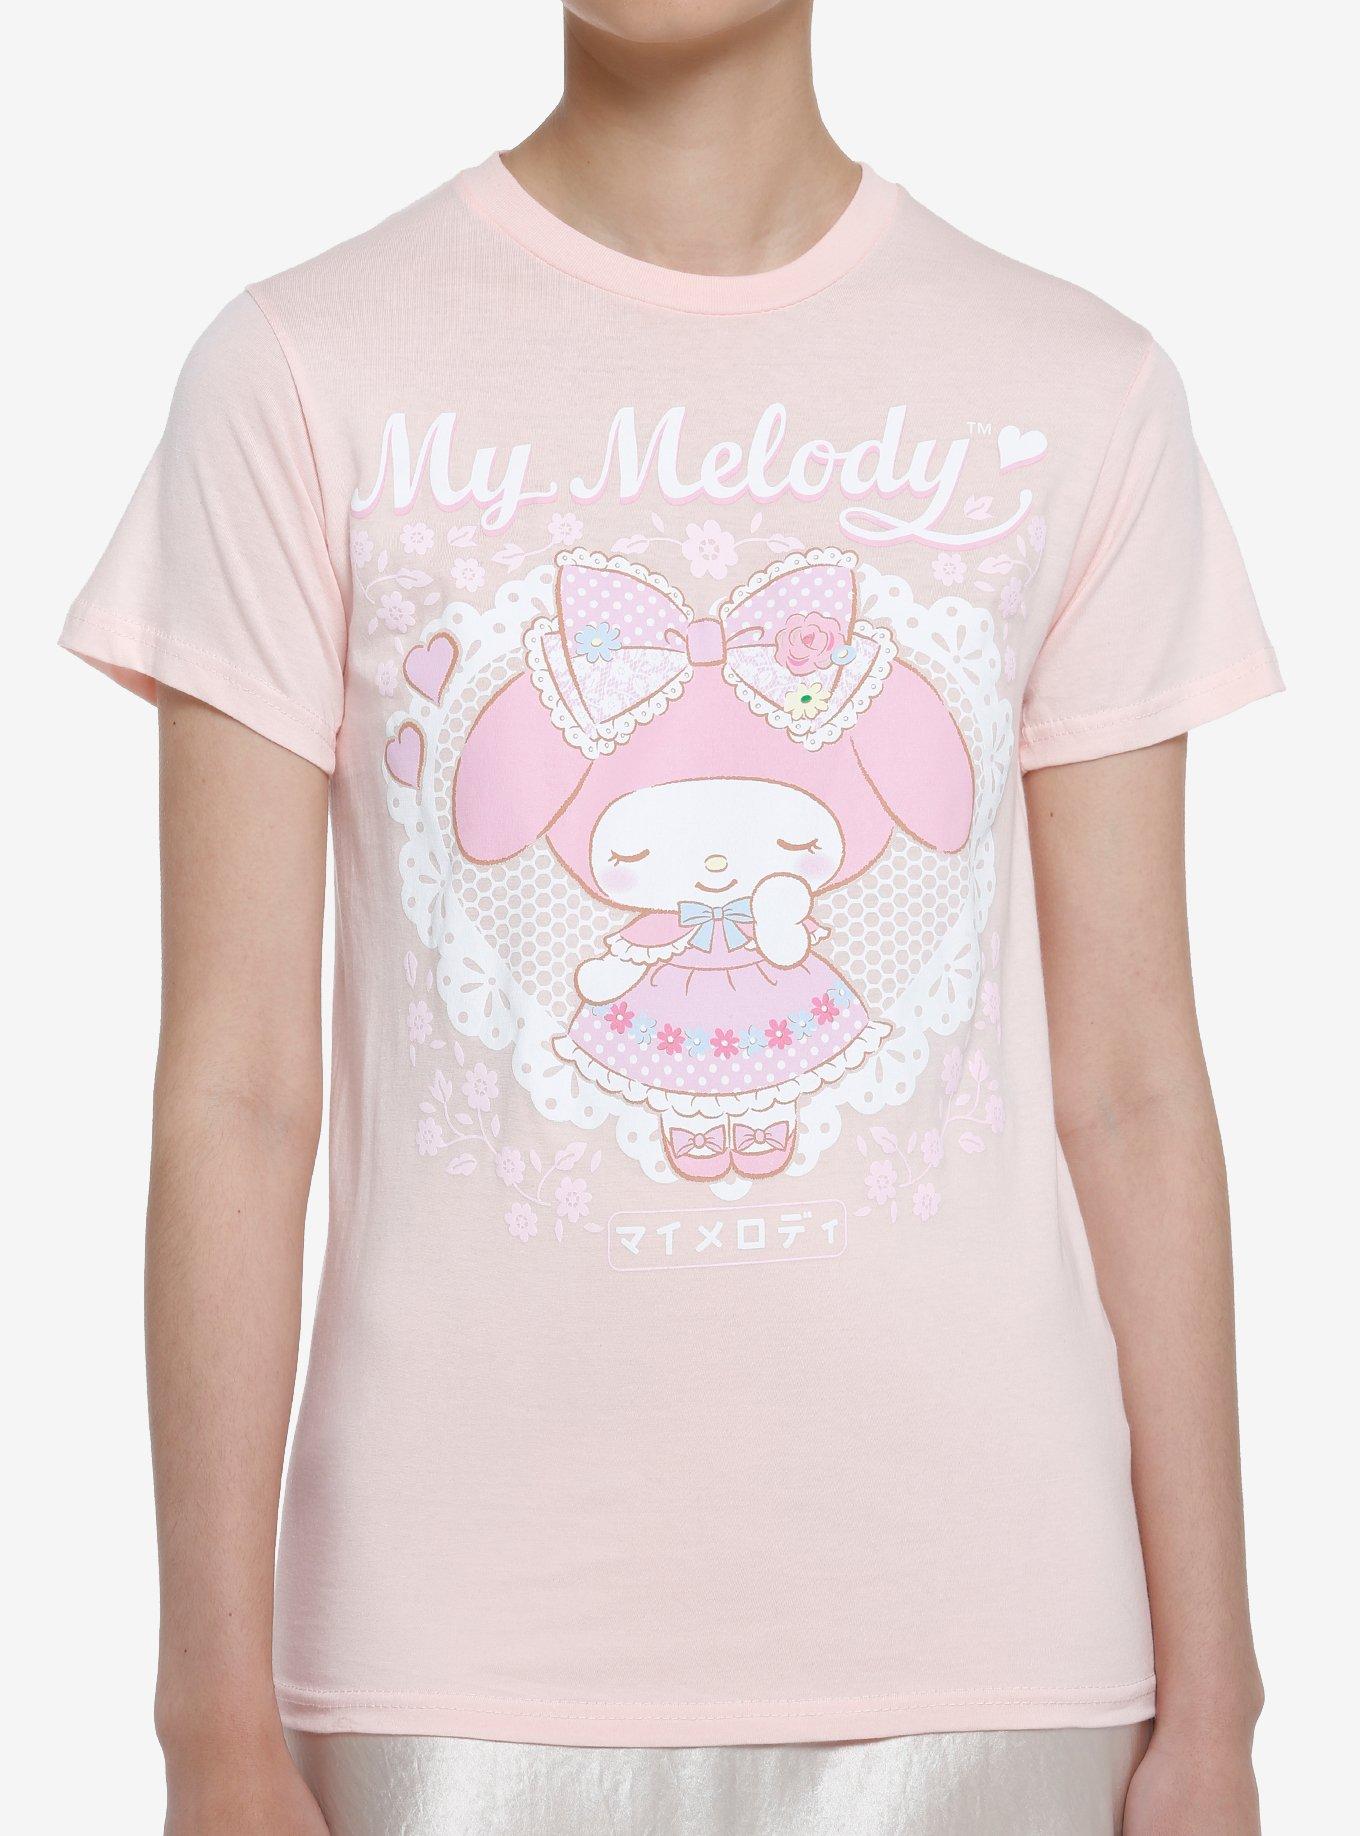 Pastel Heart Melody | Boyfriend My Lace Topic Hot Fit T-Shirt Girls